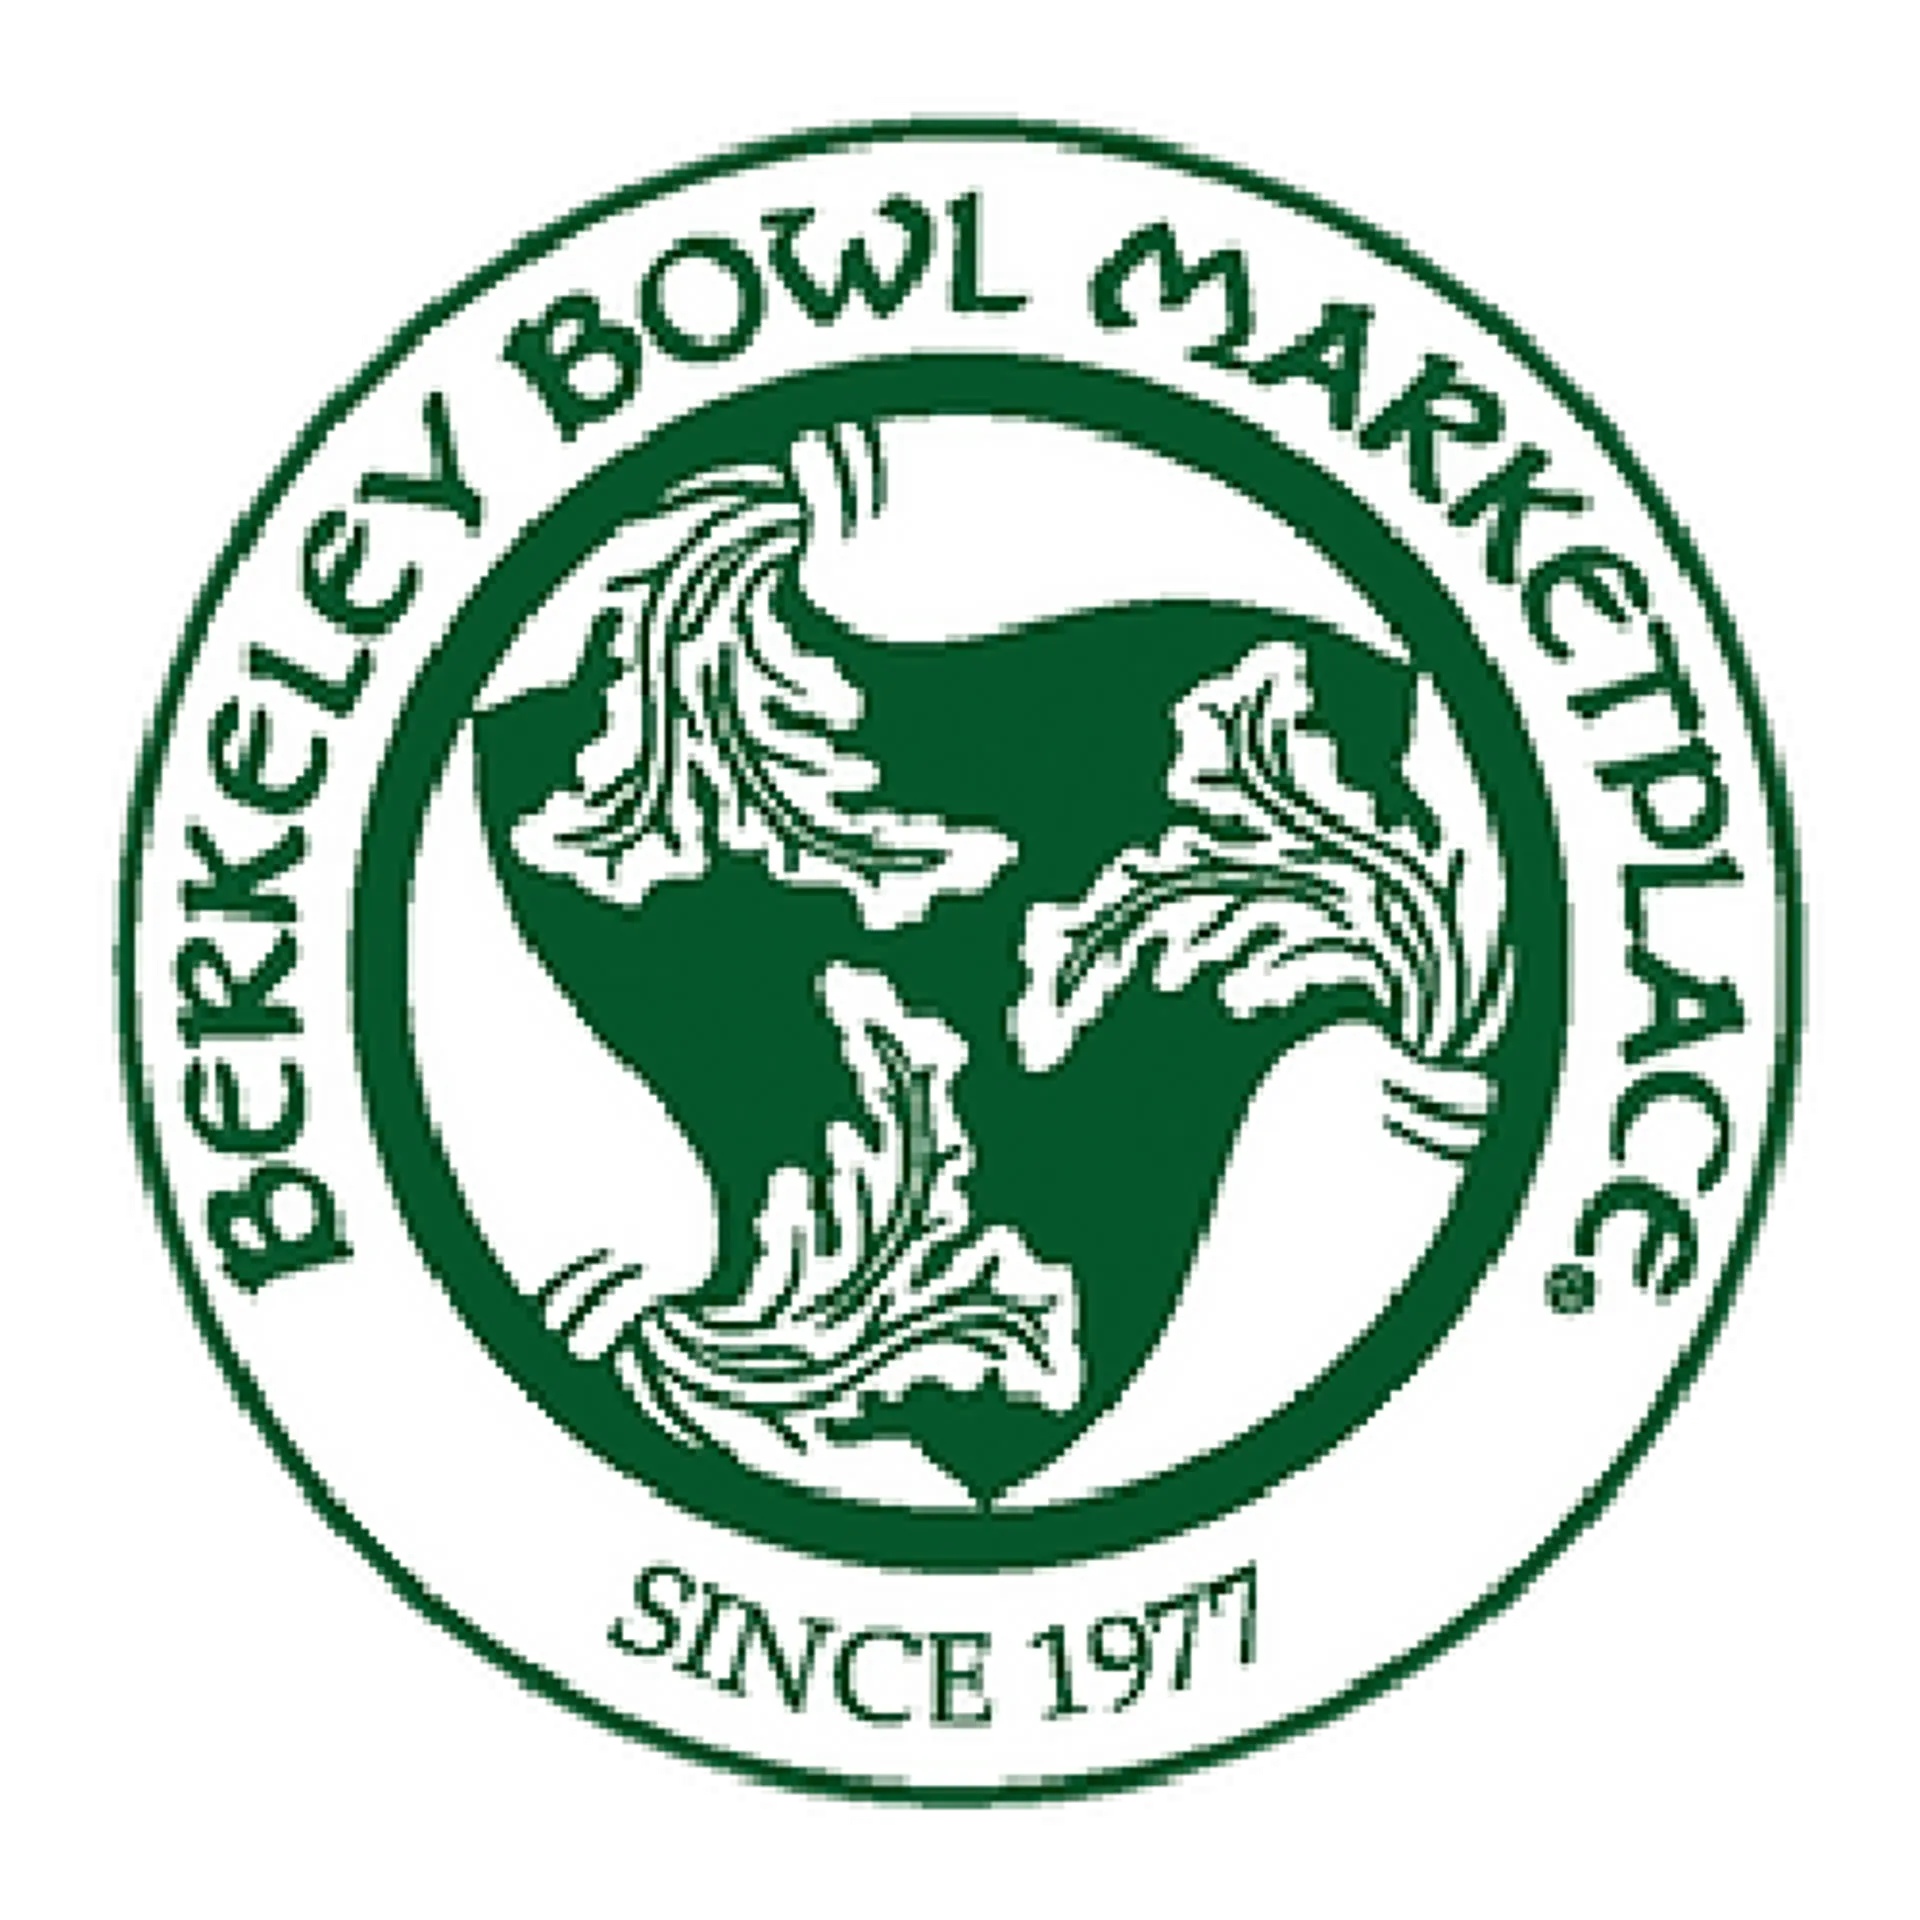 BERKELEY BOWL logo